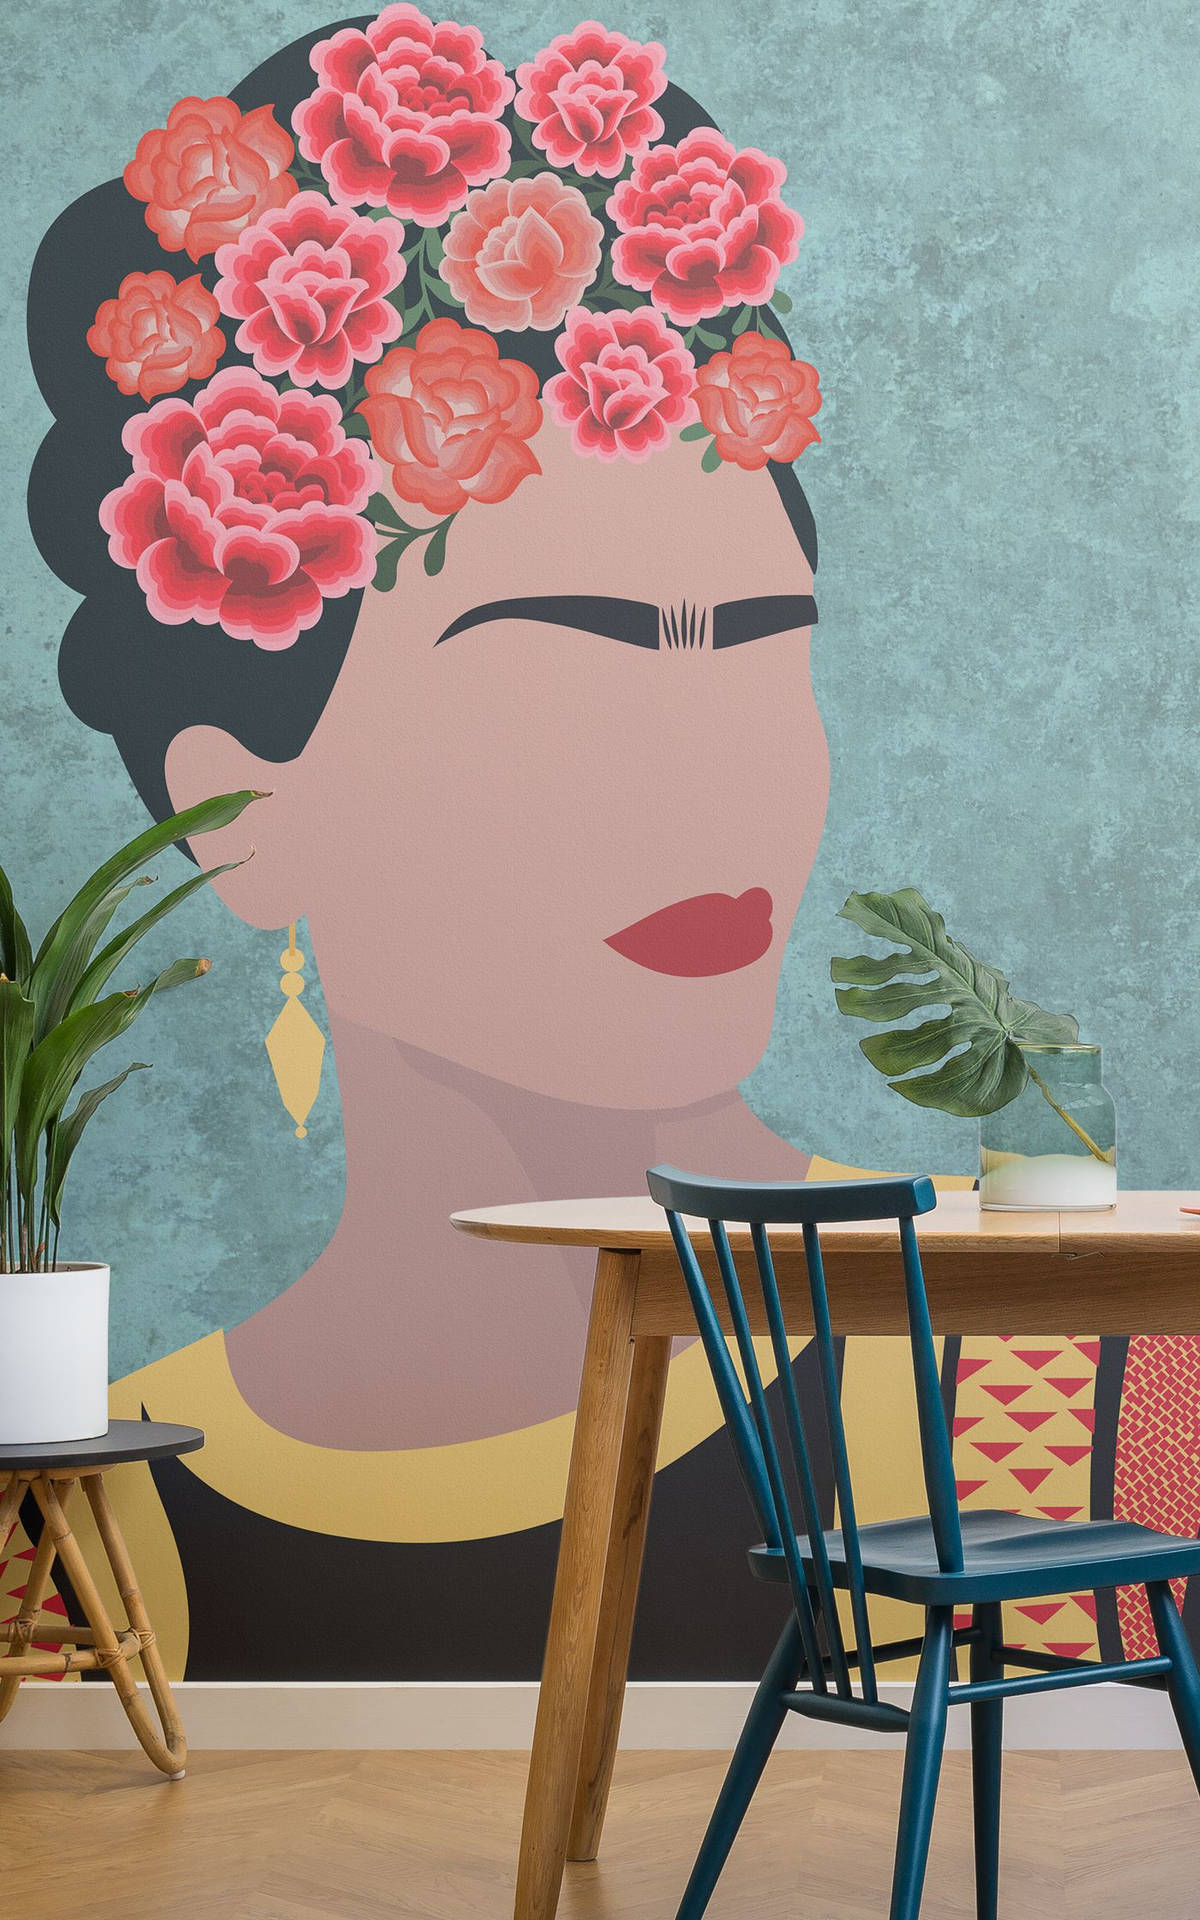 Chicano Artist Frida Kahlo